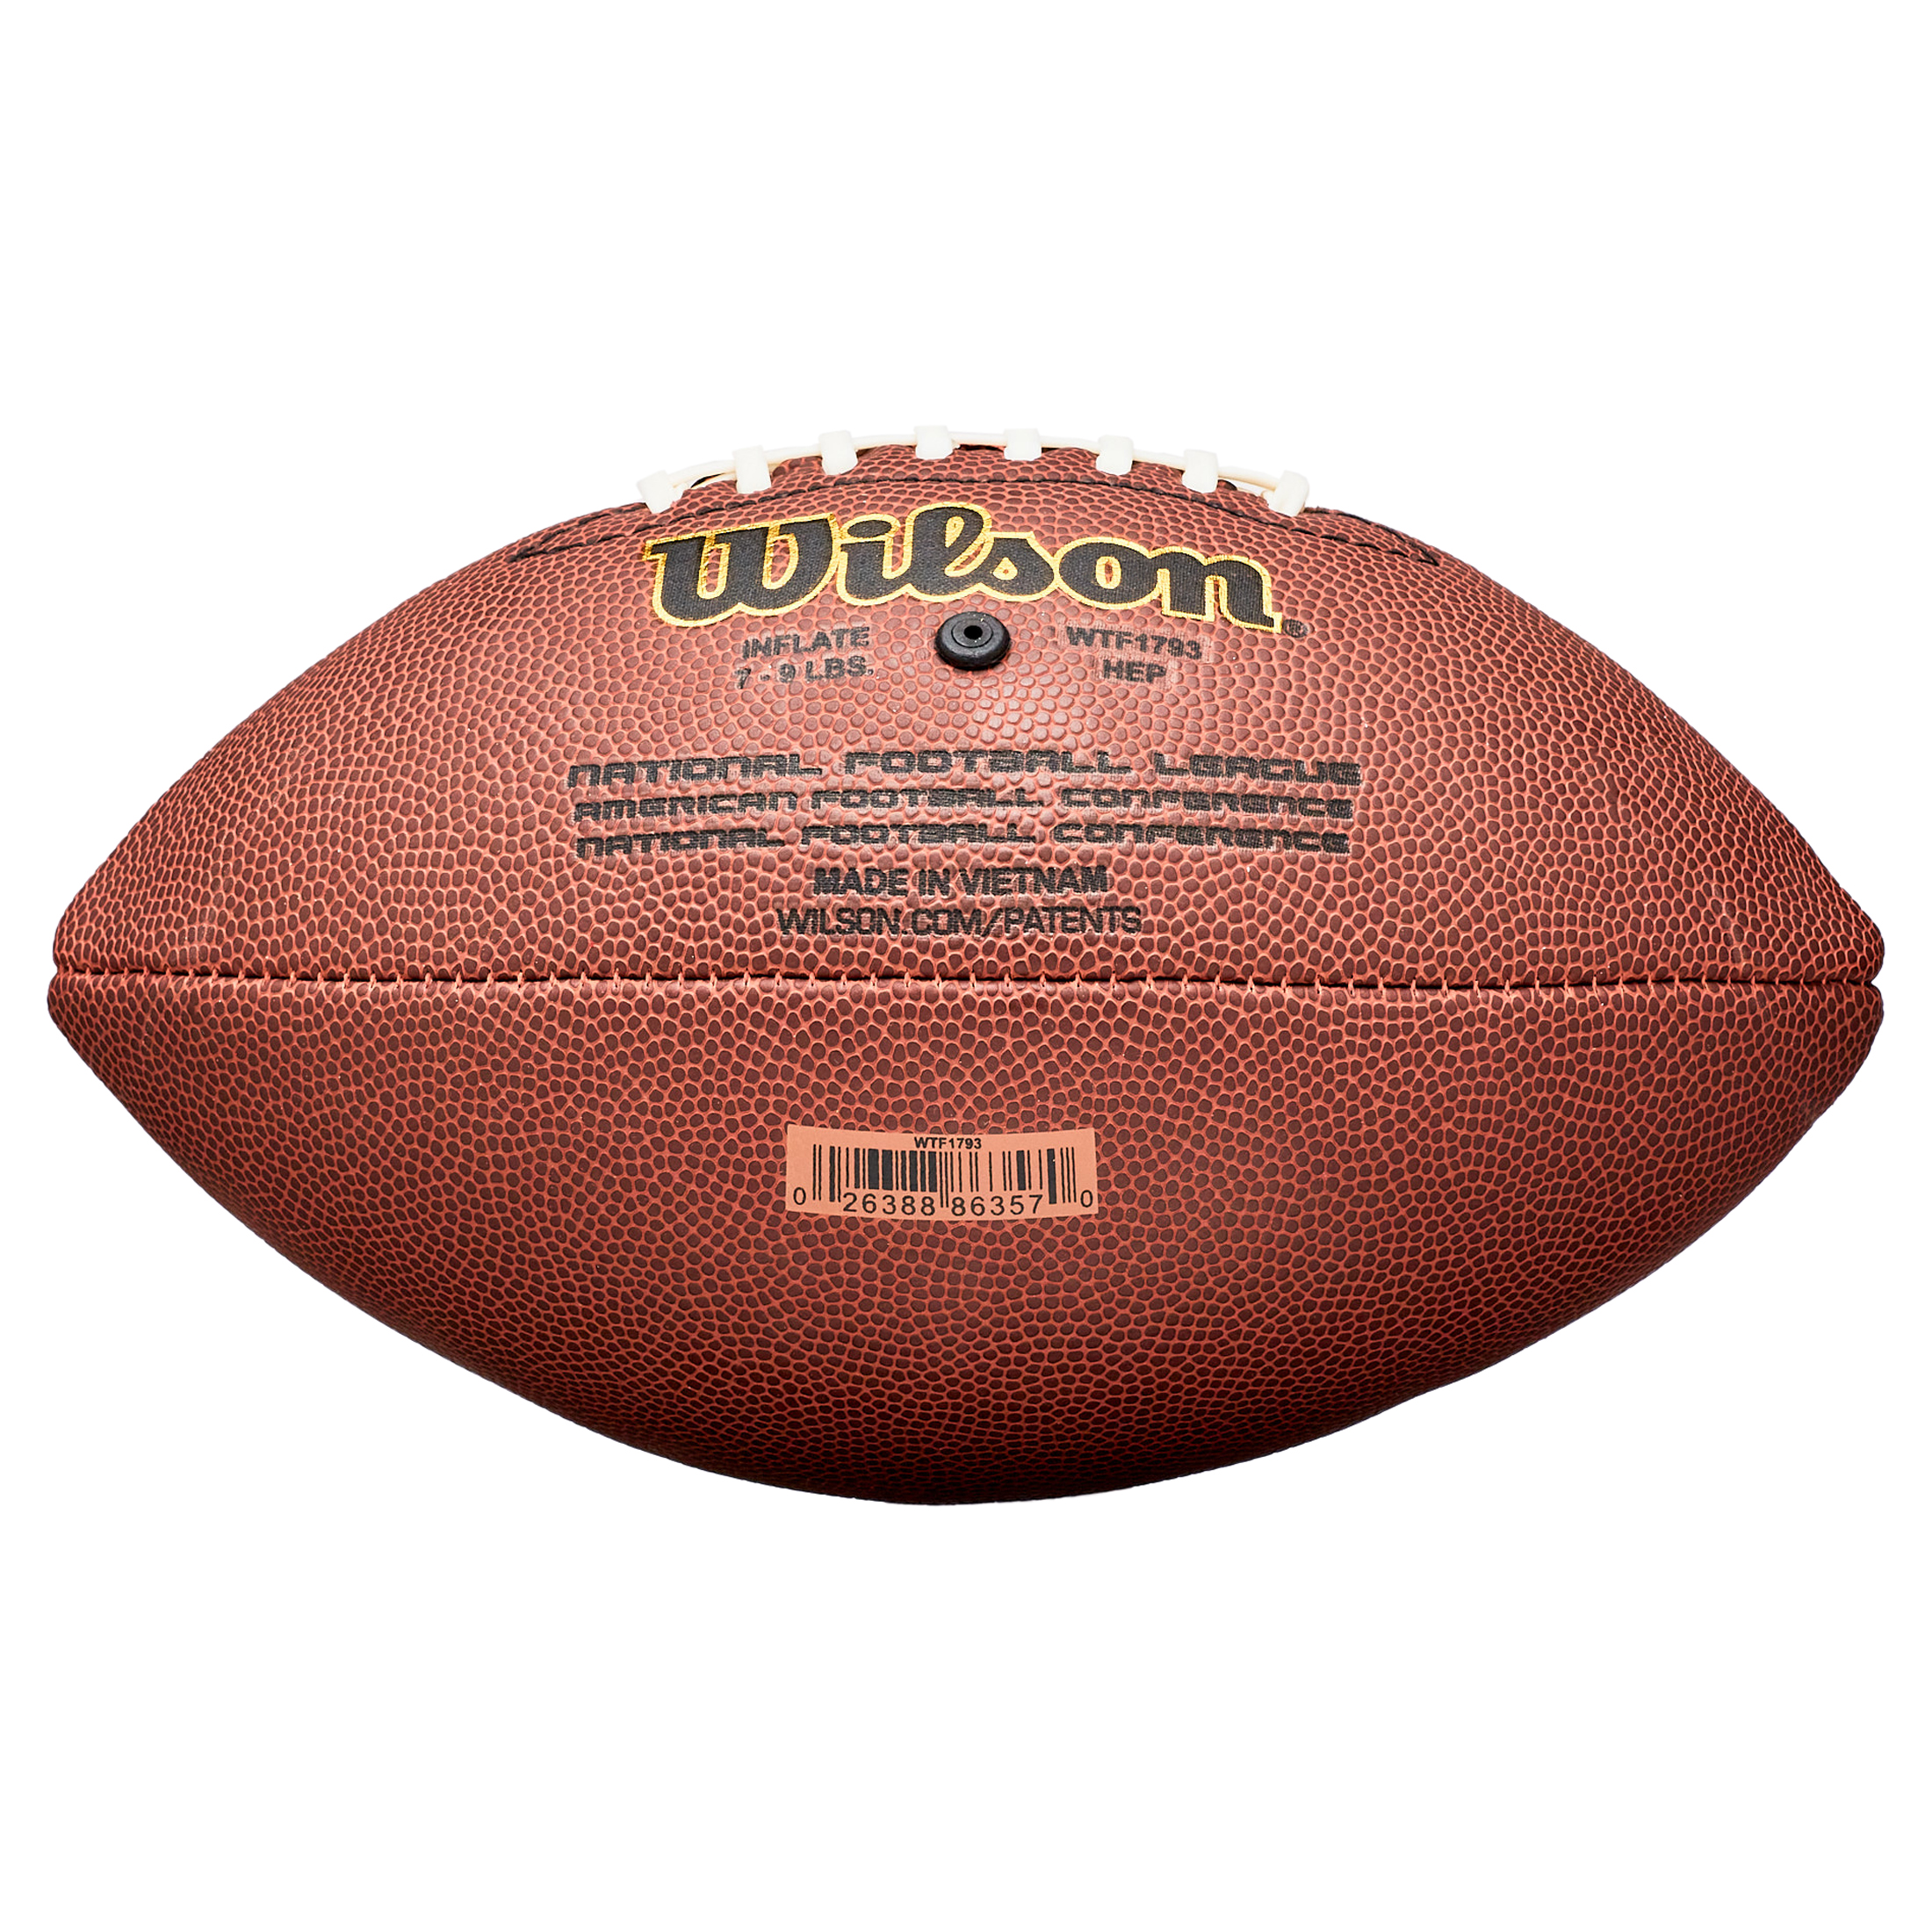 Wilson NFL Super Grip Football - Junior - image 2 of 6